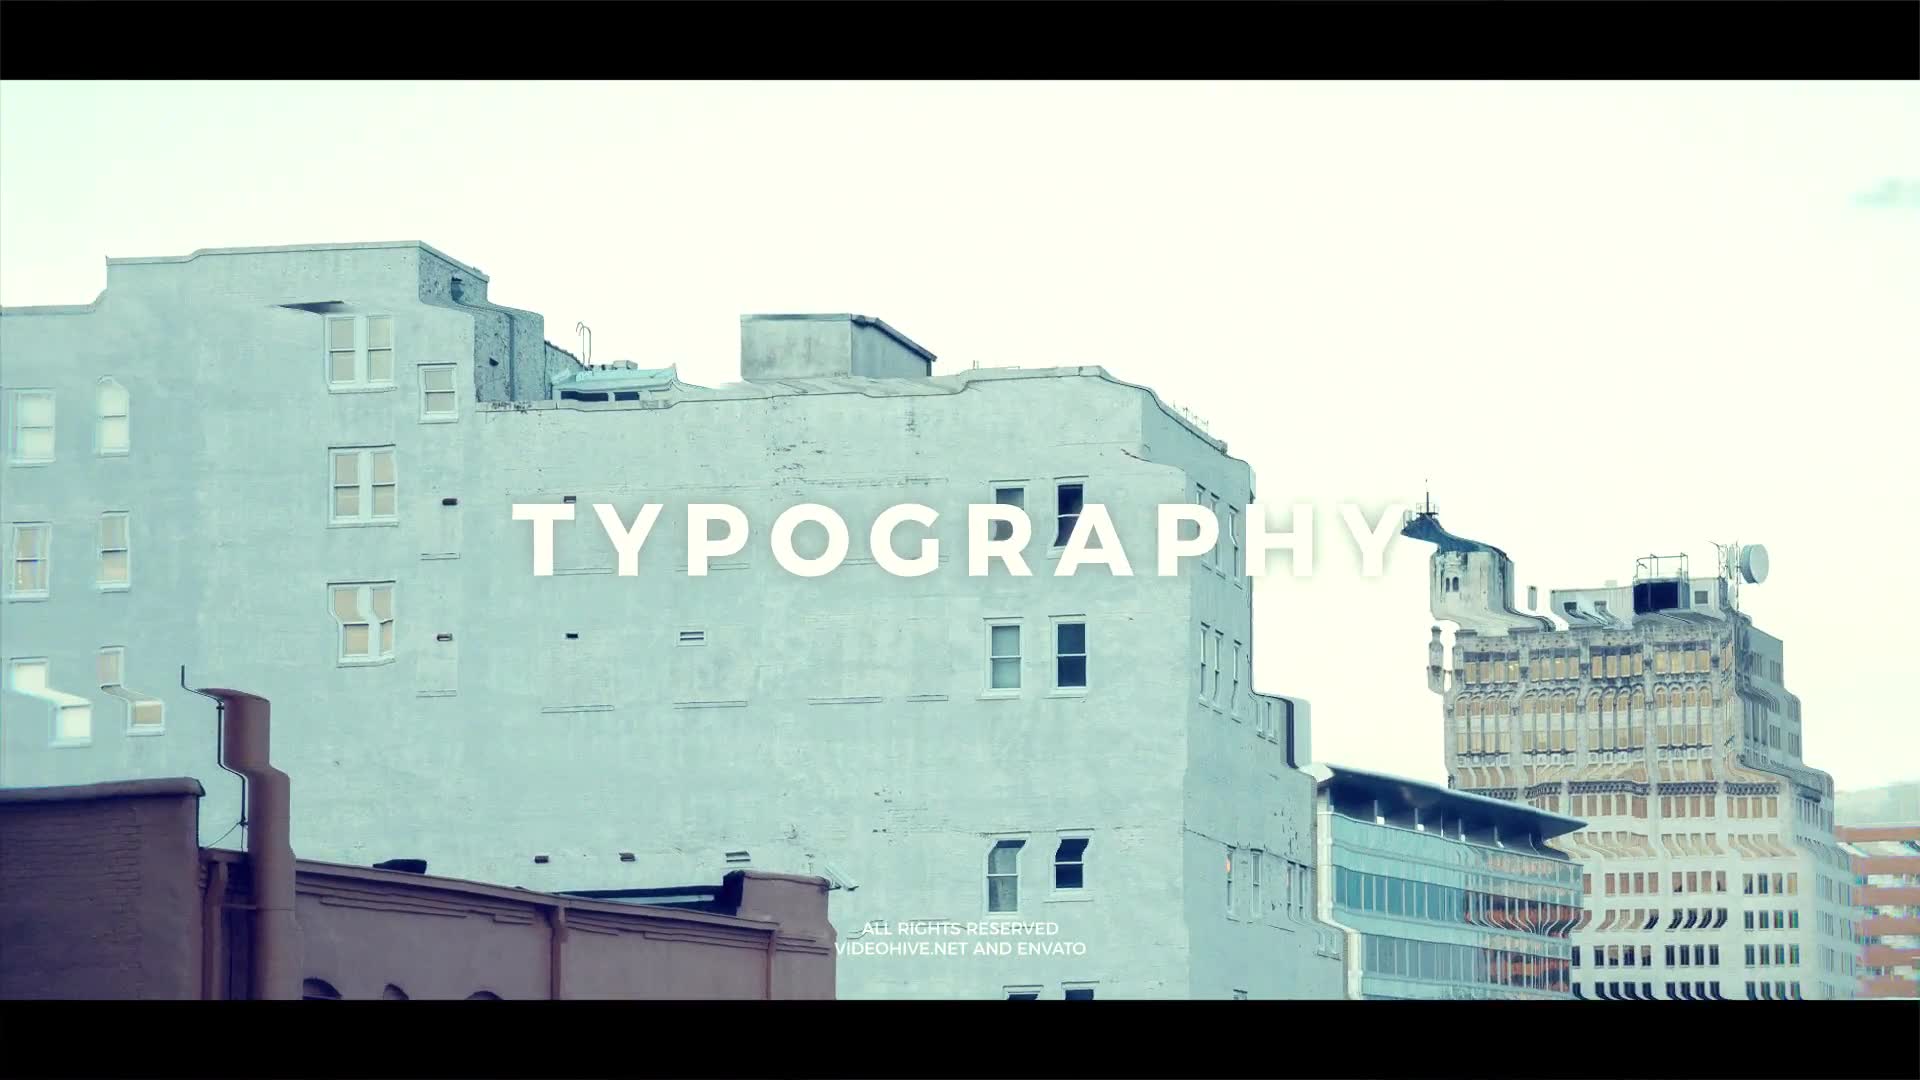 Modern Typography Slideshow - Download Videohive 20135040